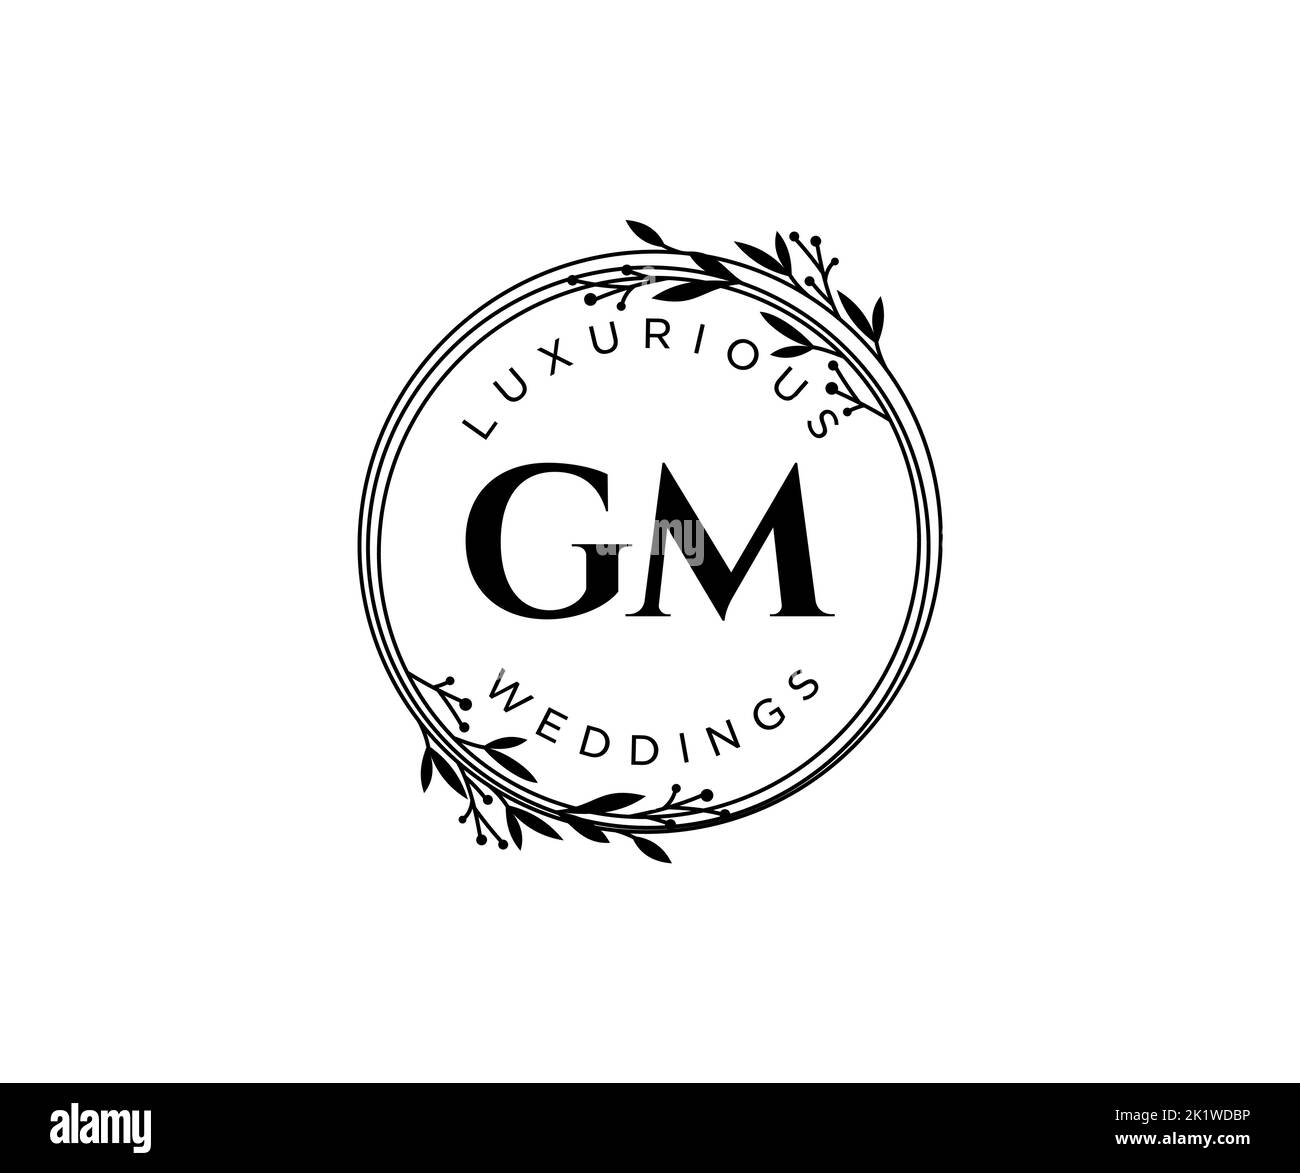 Gm logo Black and White Stock Photos & Images - Alamy